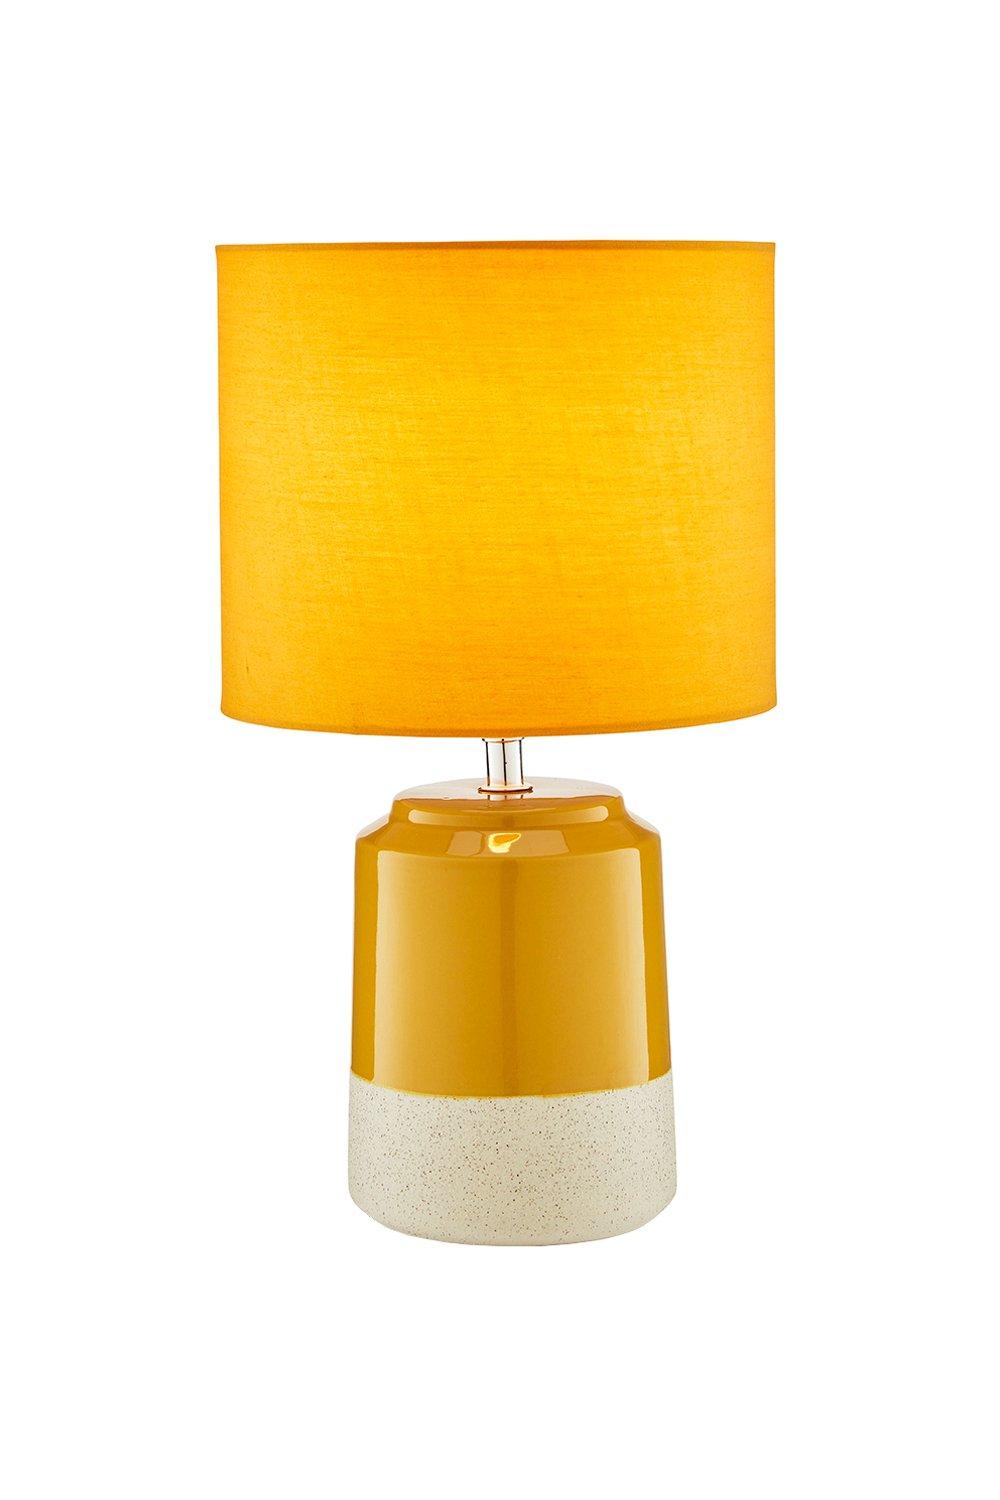 'Pop' Table Lamp Yellow